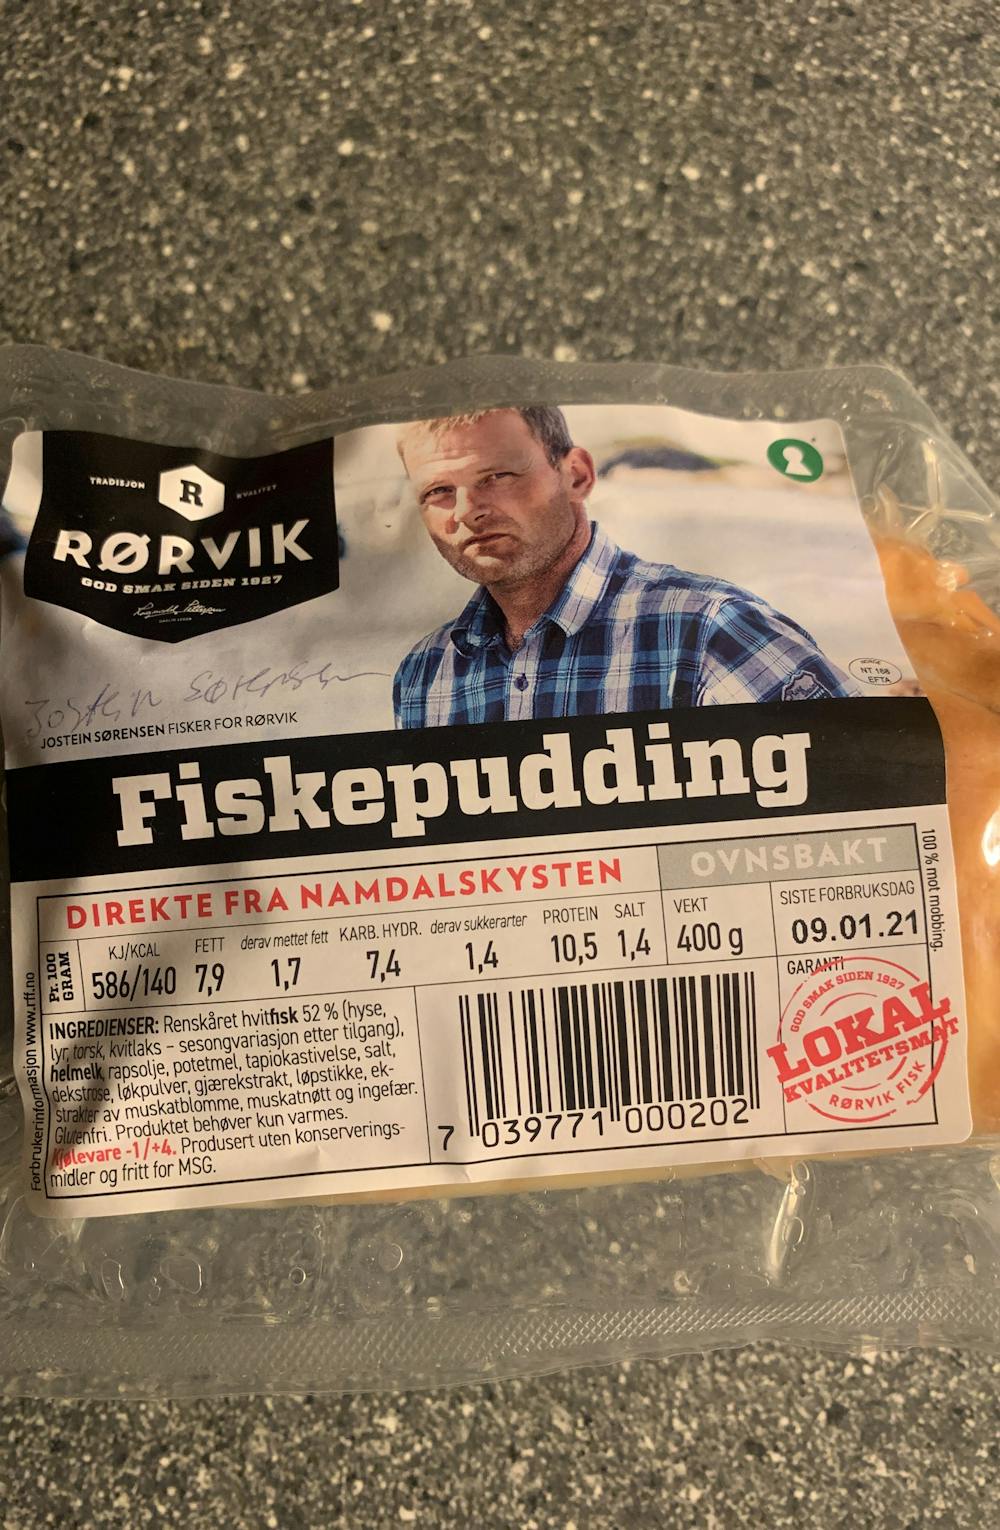 Fiskepudding, Rørvik